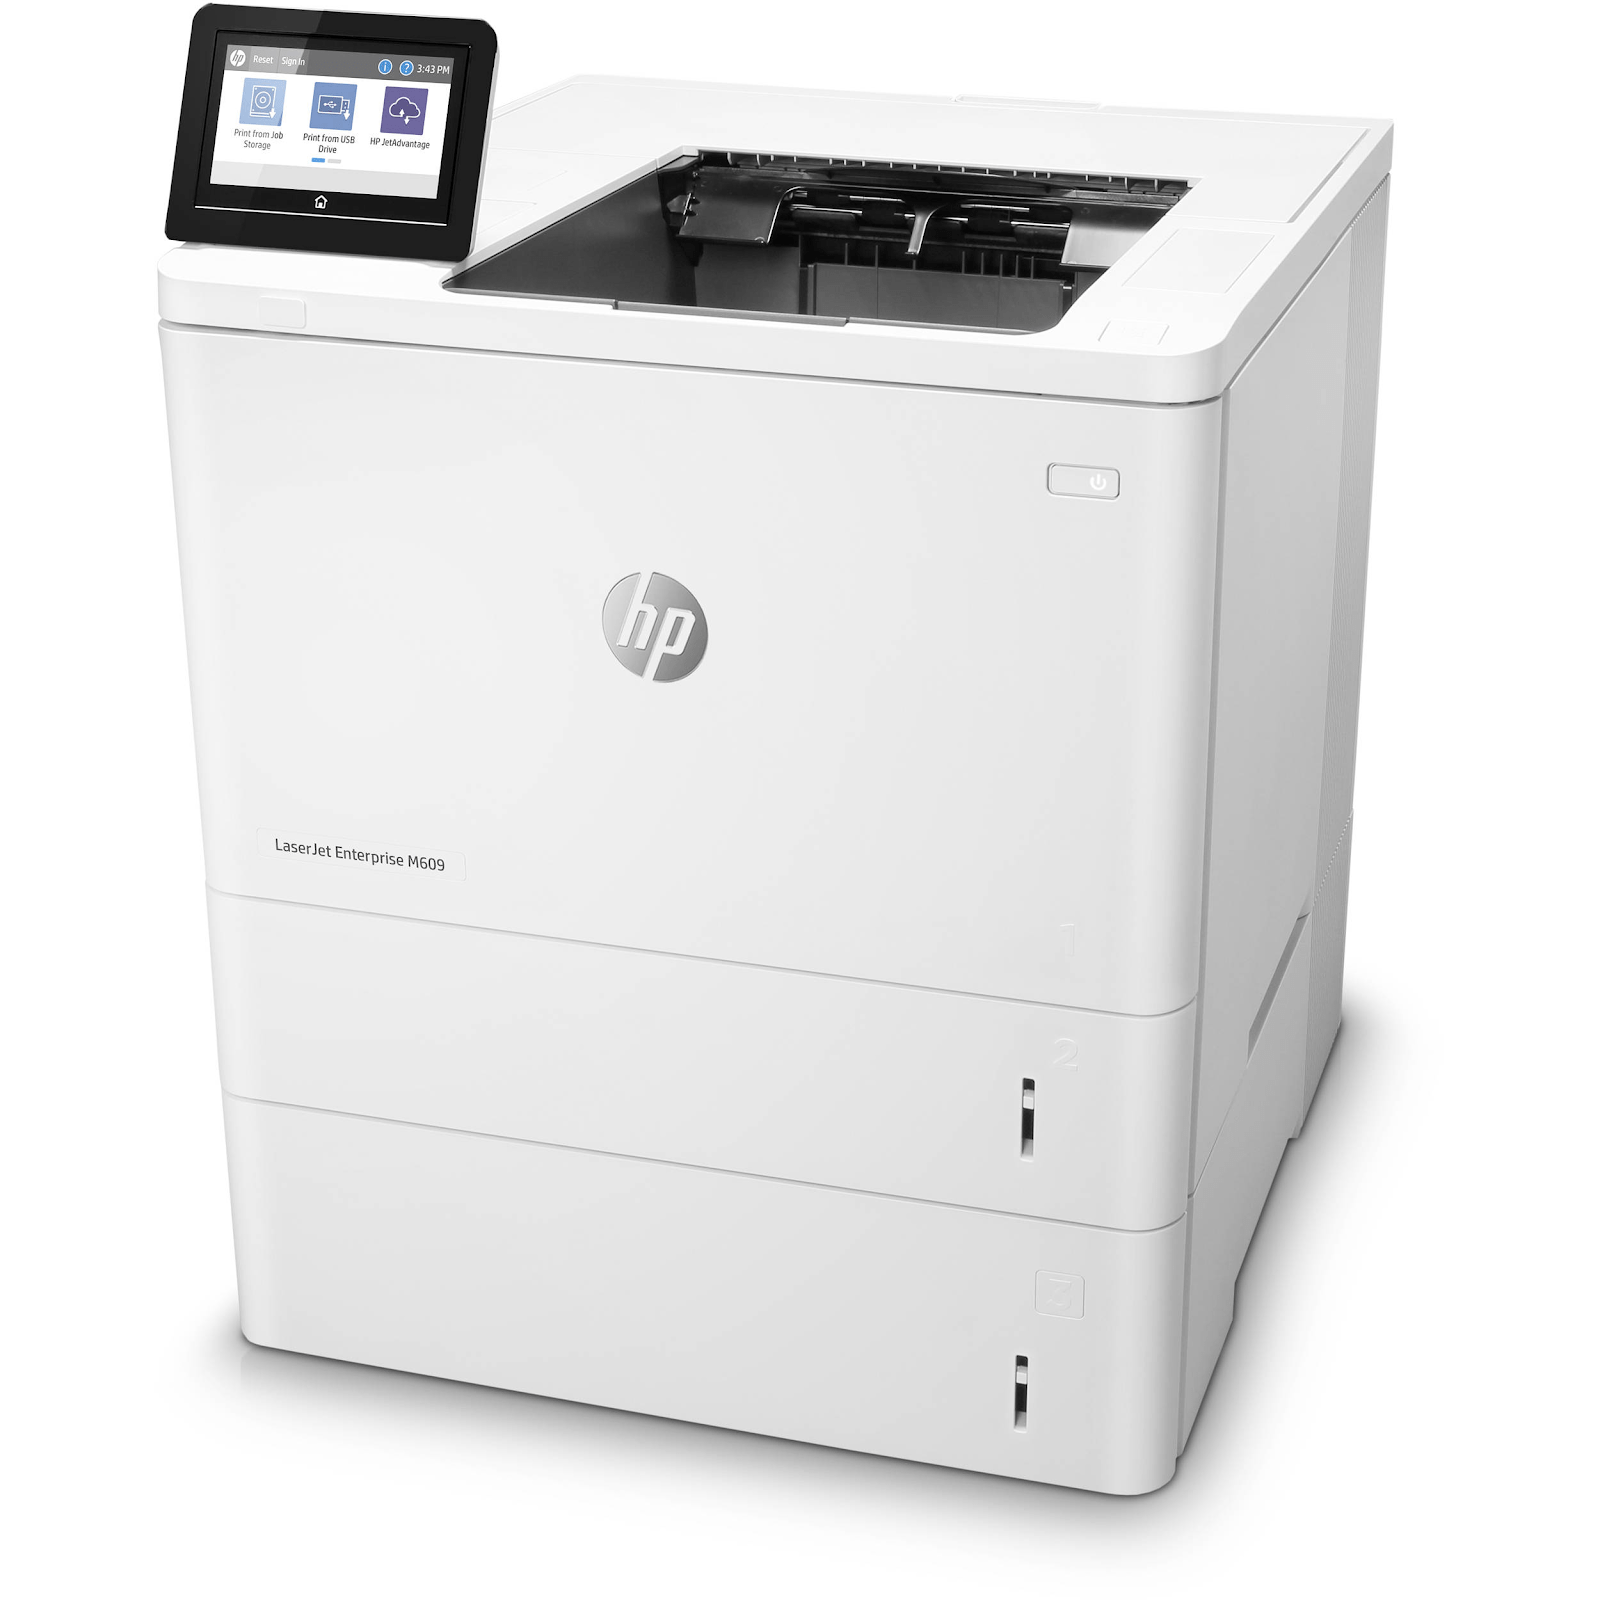 Absolute Toner HP B/W Laserjet M609 (M609x) Laser Printer Monochrome 1200 x 1200 dpi Print HIGH SPEED upto 71 PPM Laser Printer